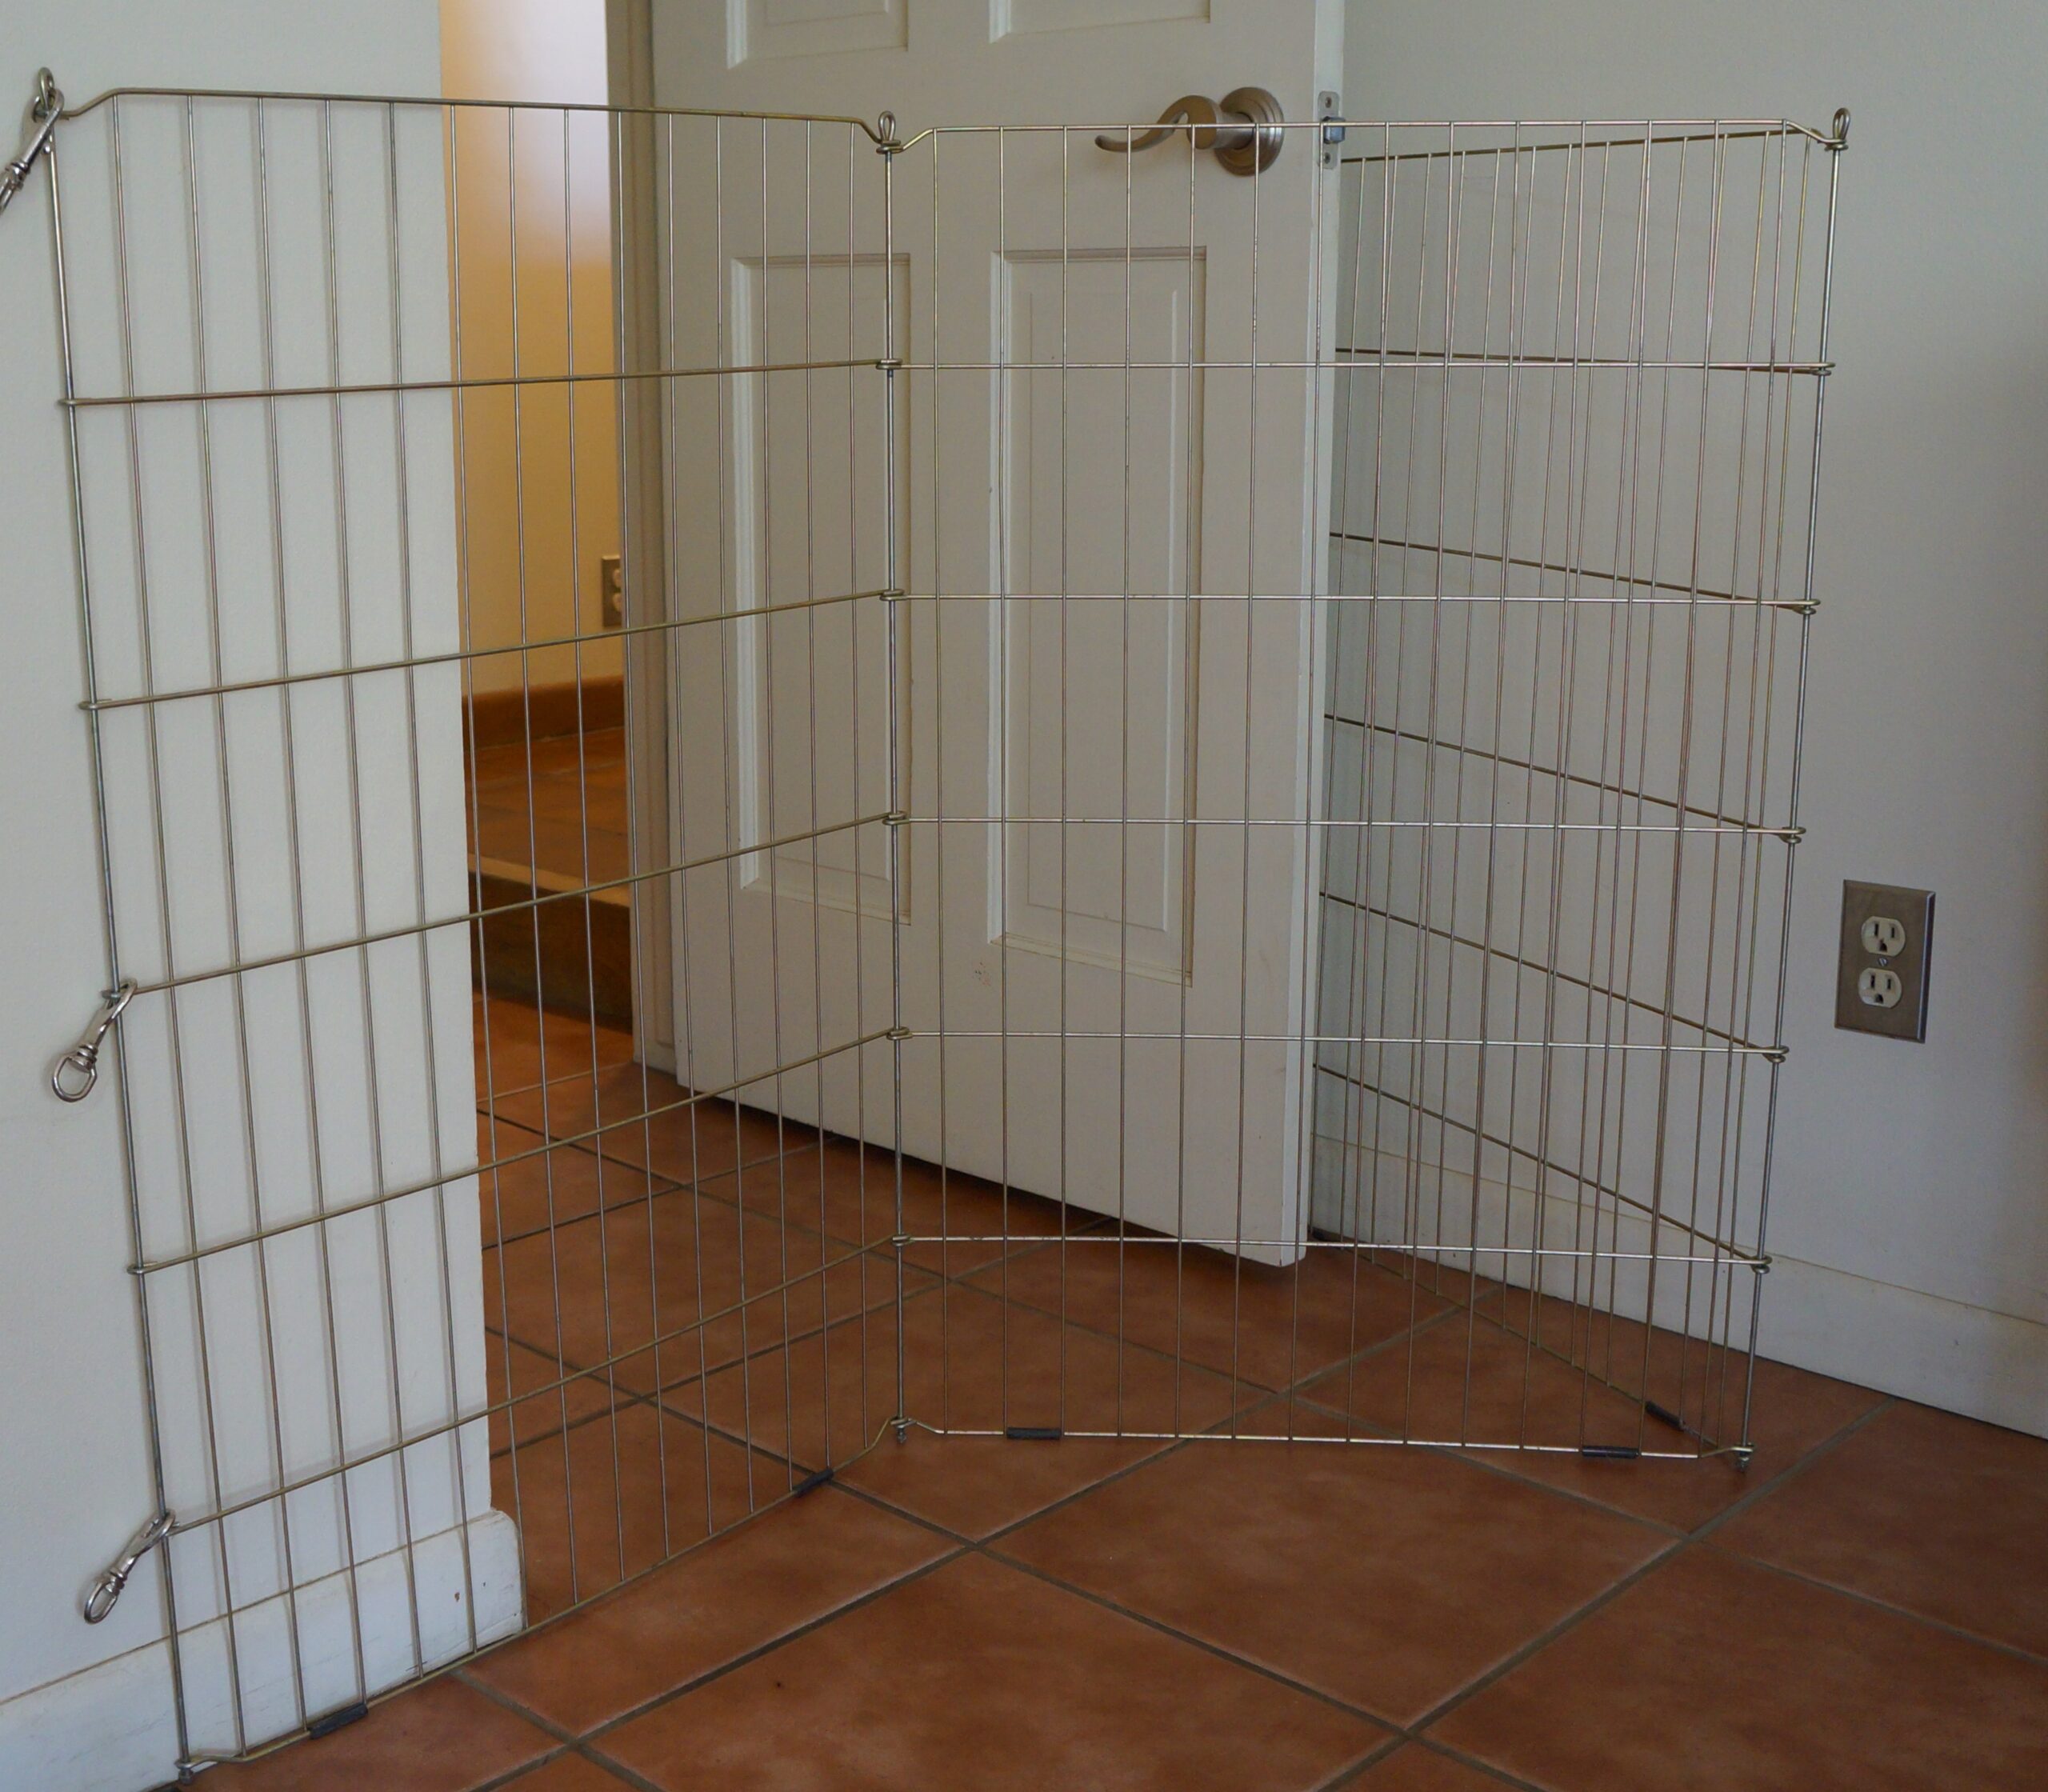 foster puppy set up - photo of x-pen blocking office doorway